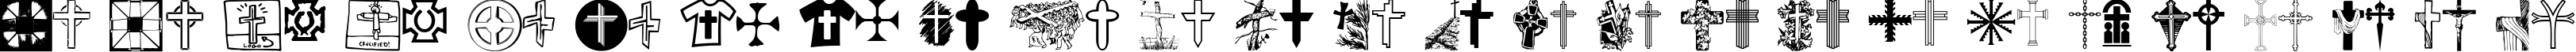 Пример написания английского алфавита шрифтом Christian Crosses V